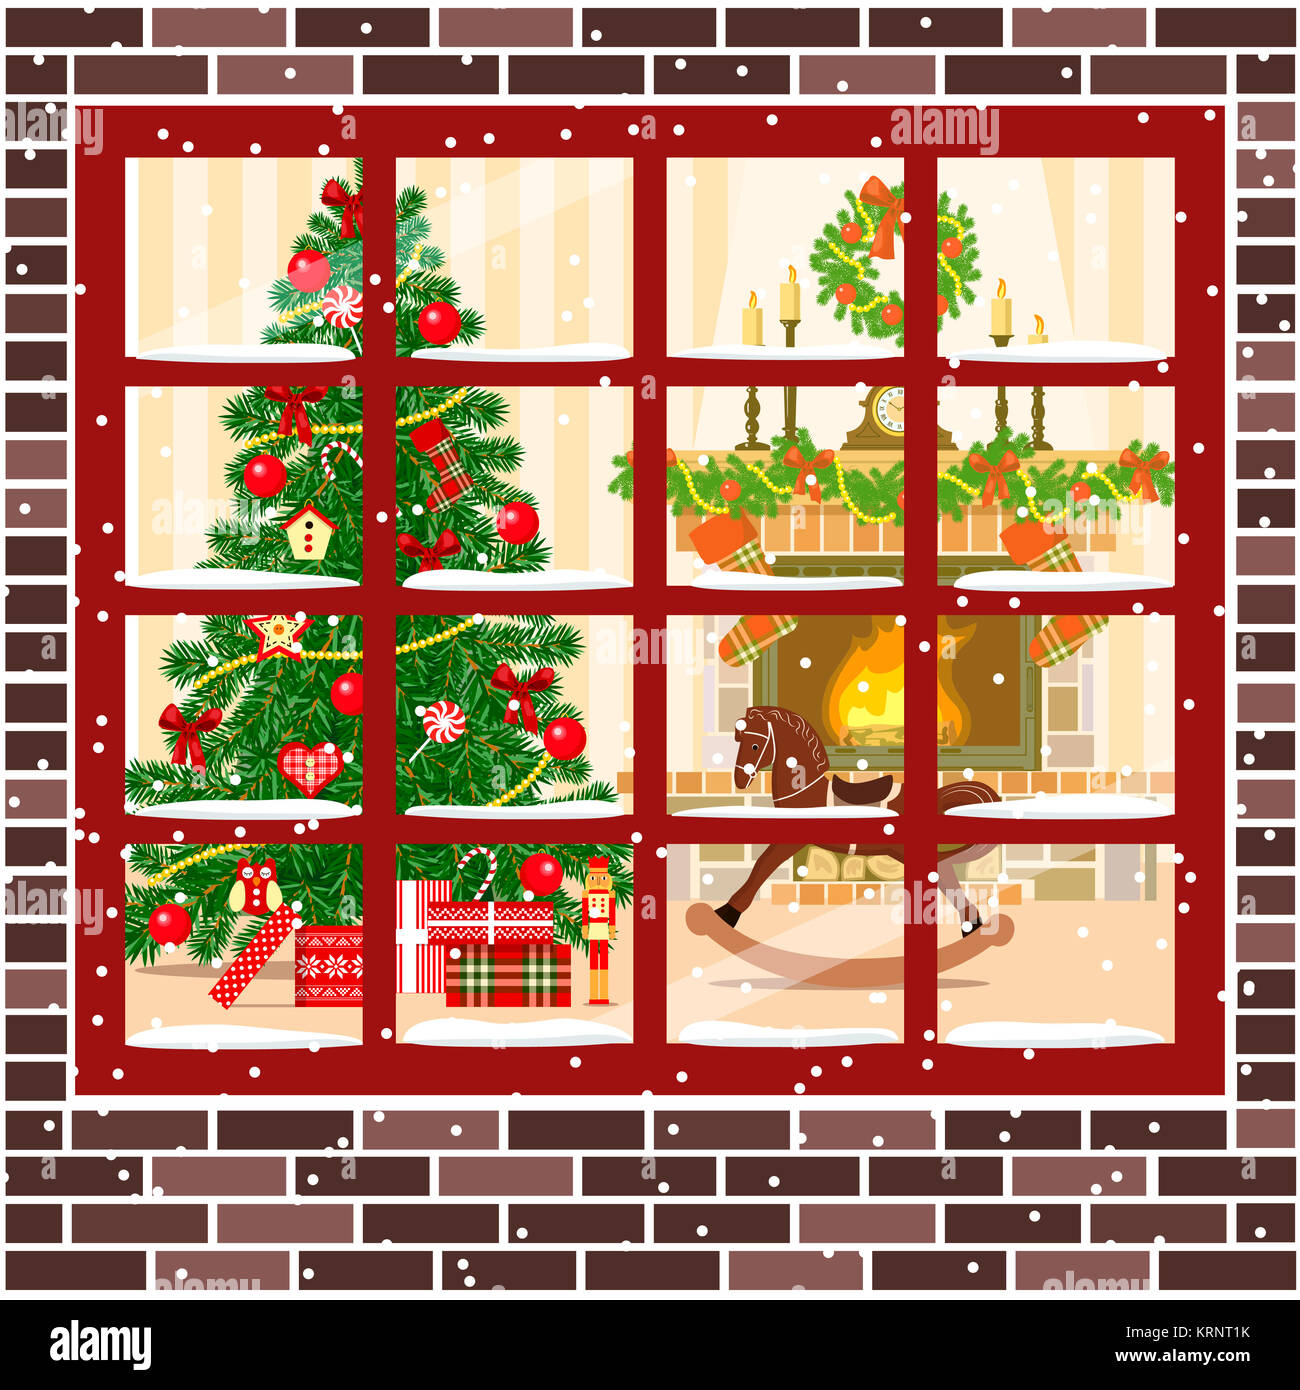 Christmas room with fireplace, furniture xmas tree Stock Photo